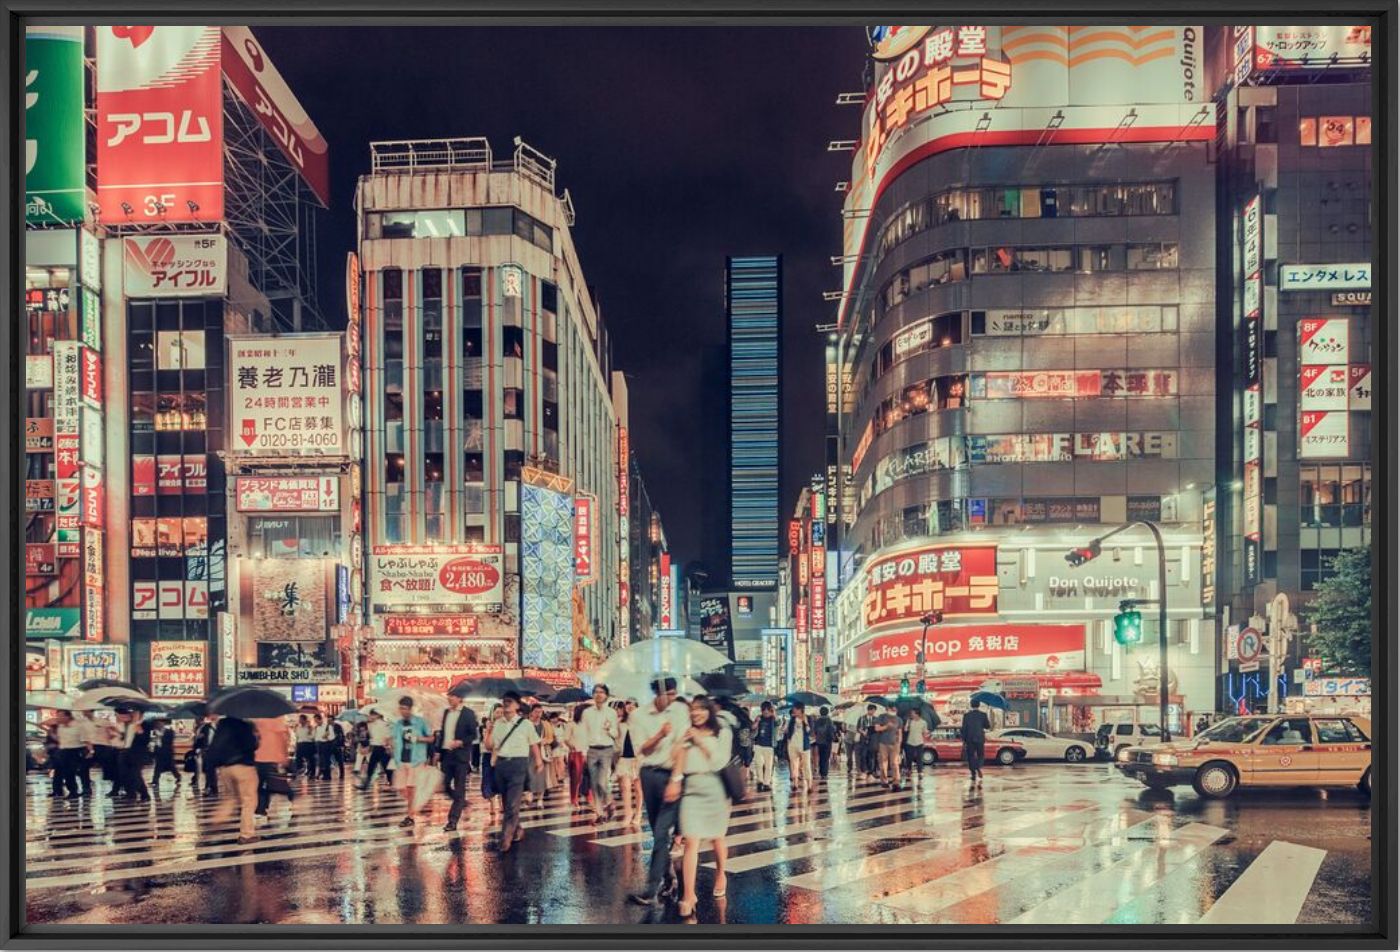 Fotografia SHINJUKU TOKYO - FRANCK BOHBOT - Pittura di immagini